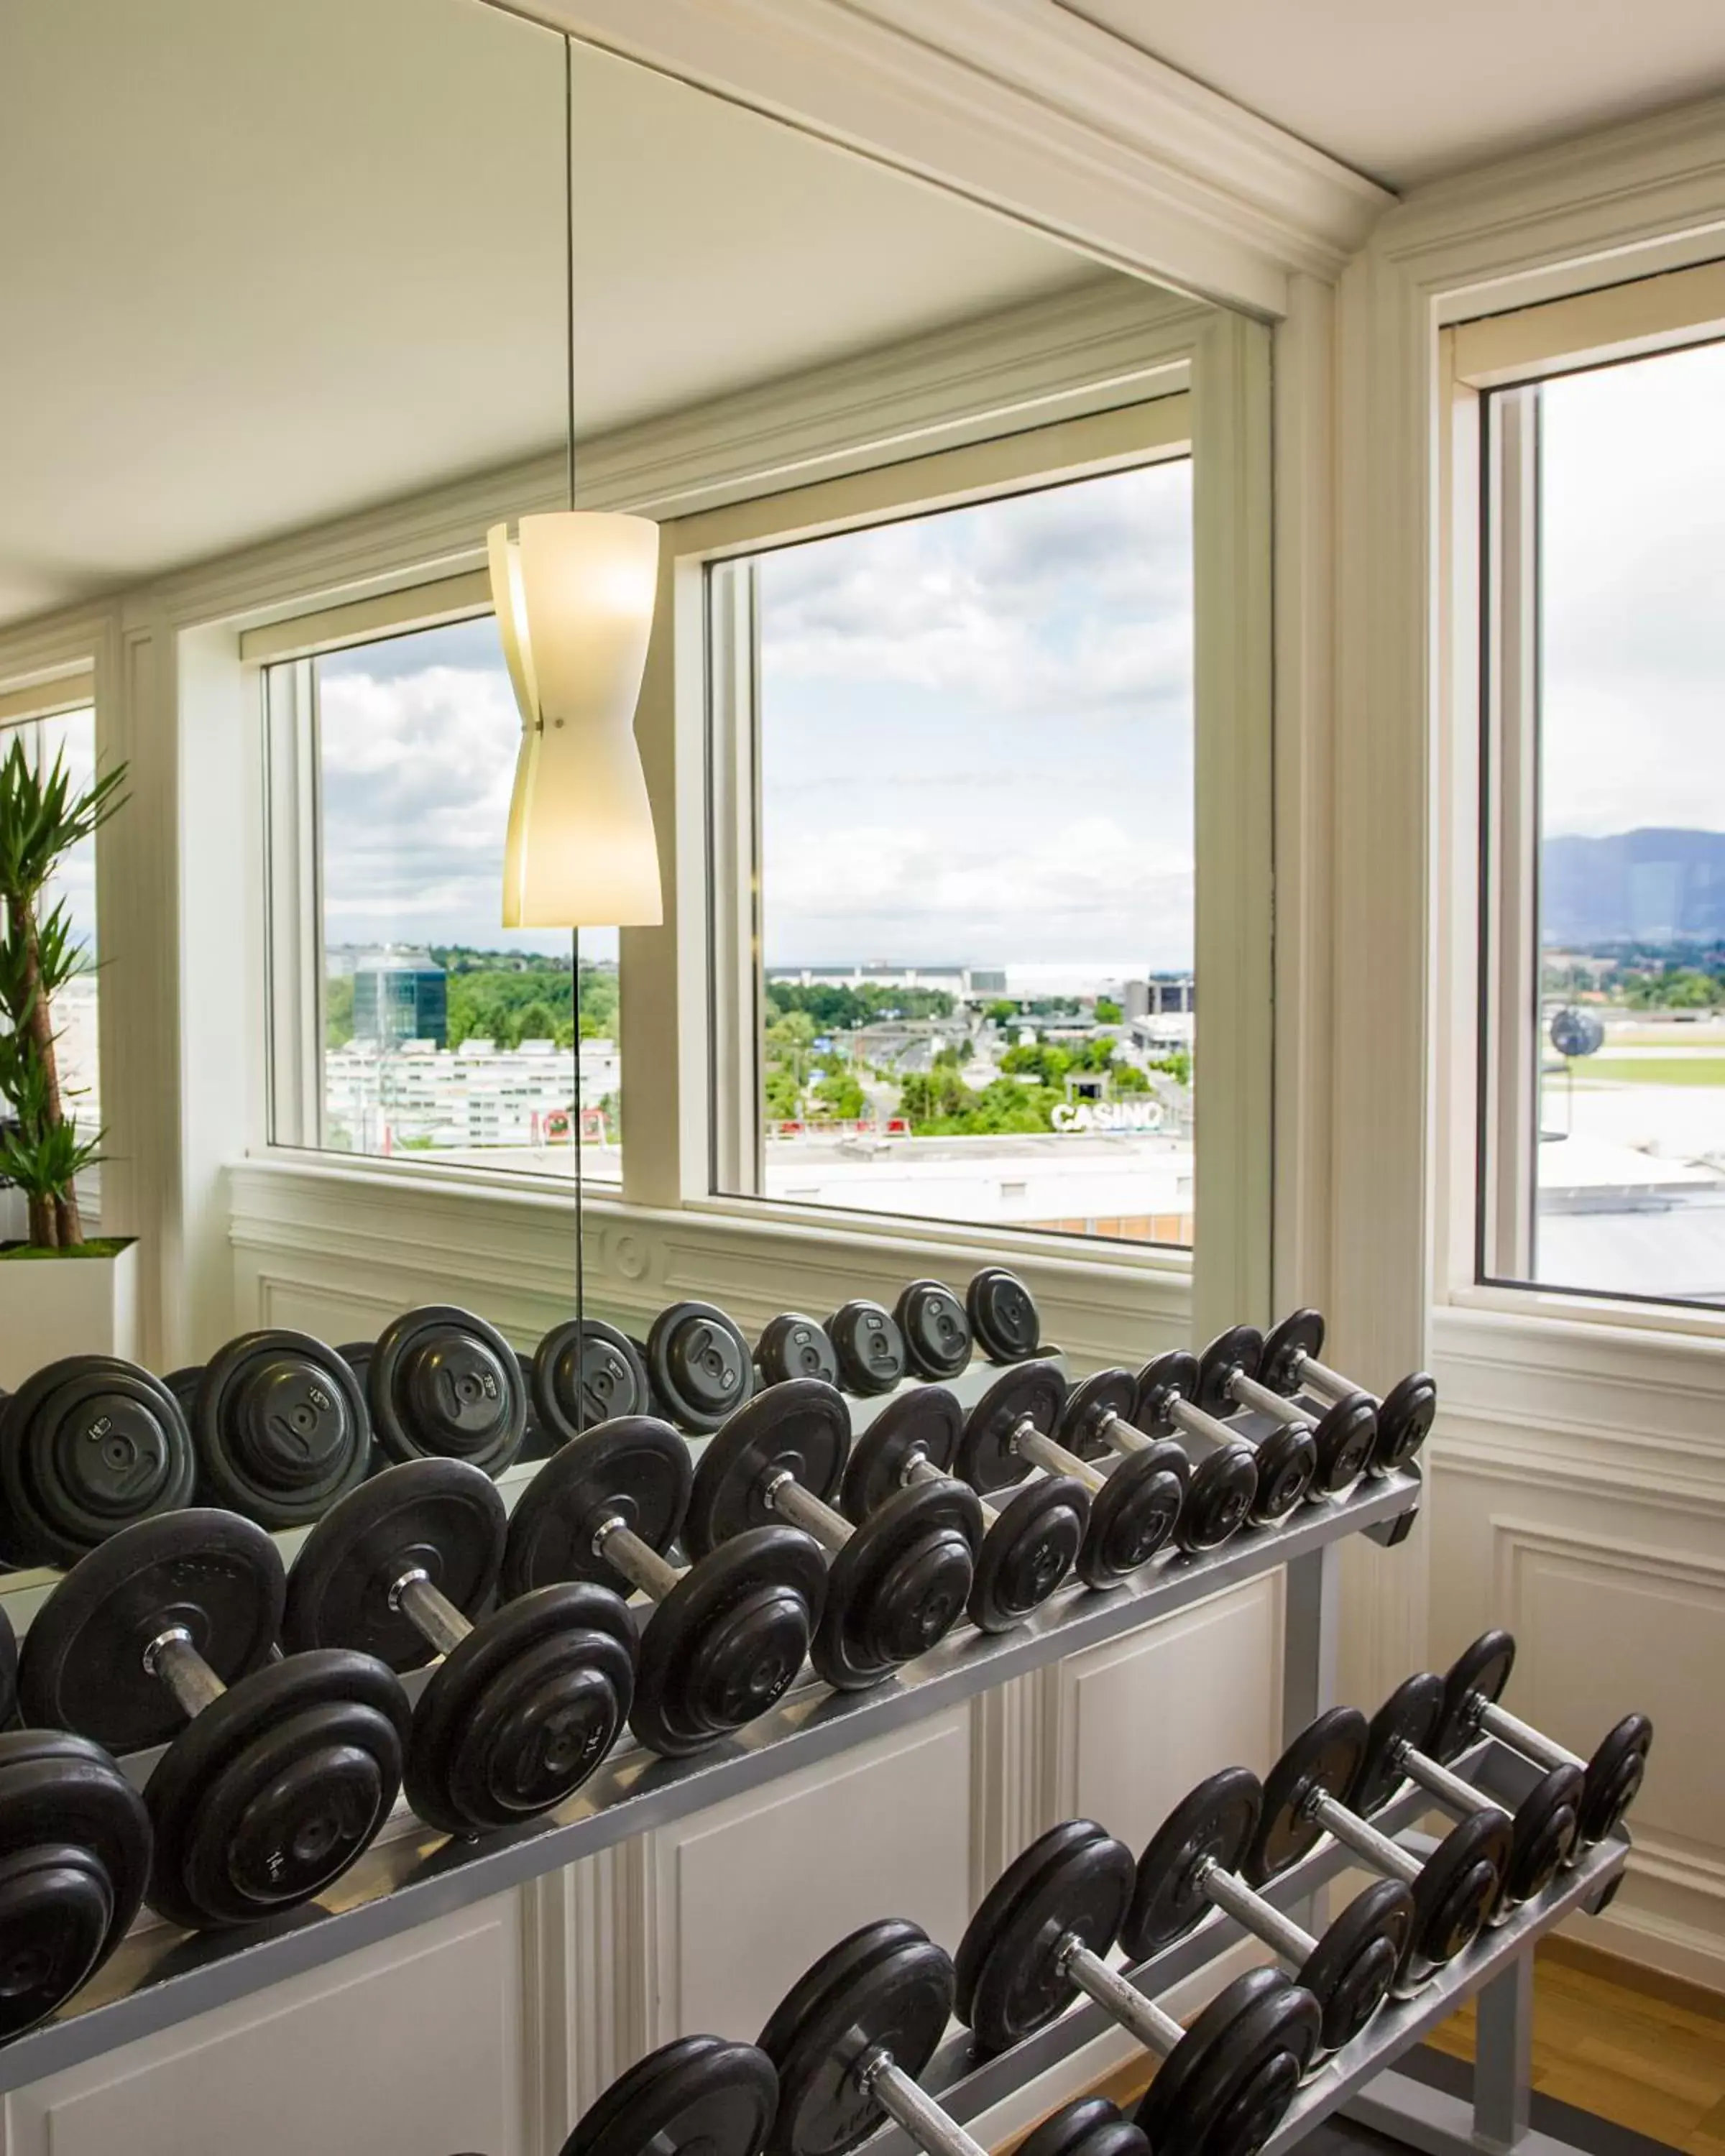 Fitness centre/facilities, Fitness Center/Facilities in Moevenpick Hotel And Casino Geneva